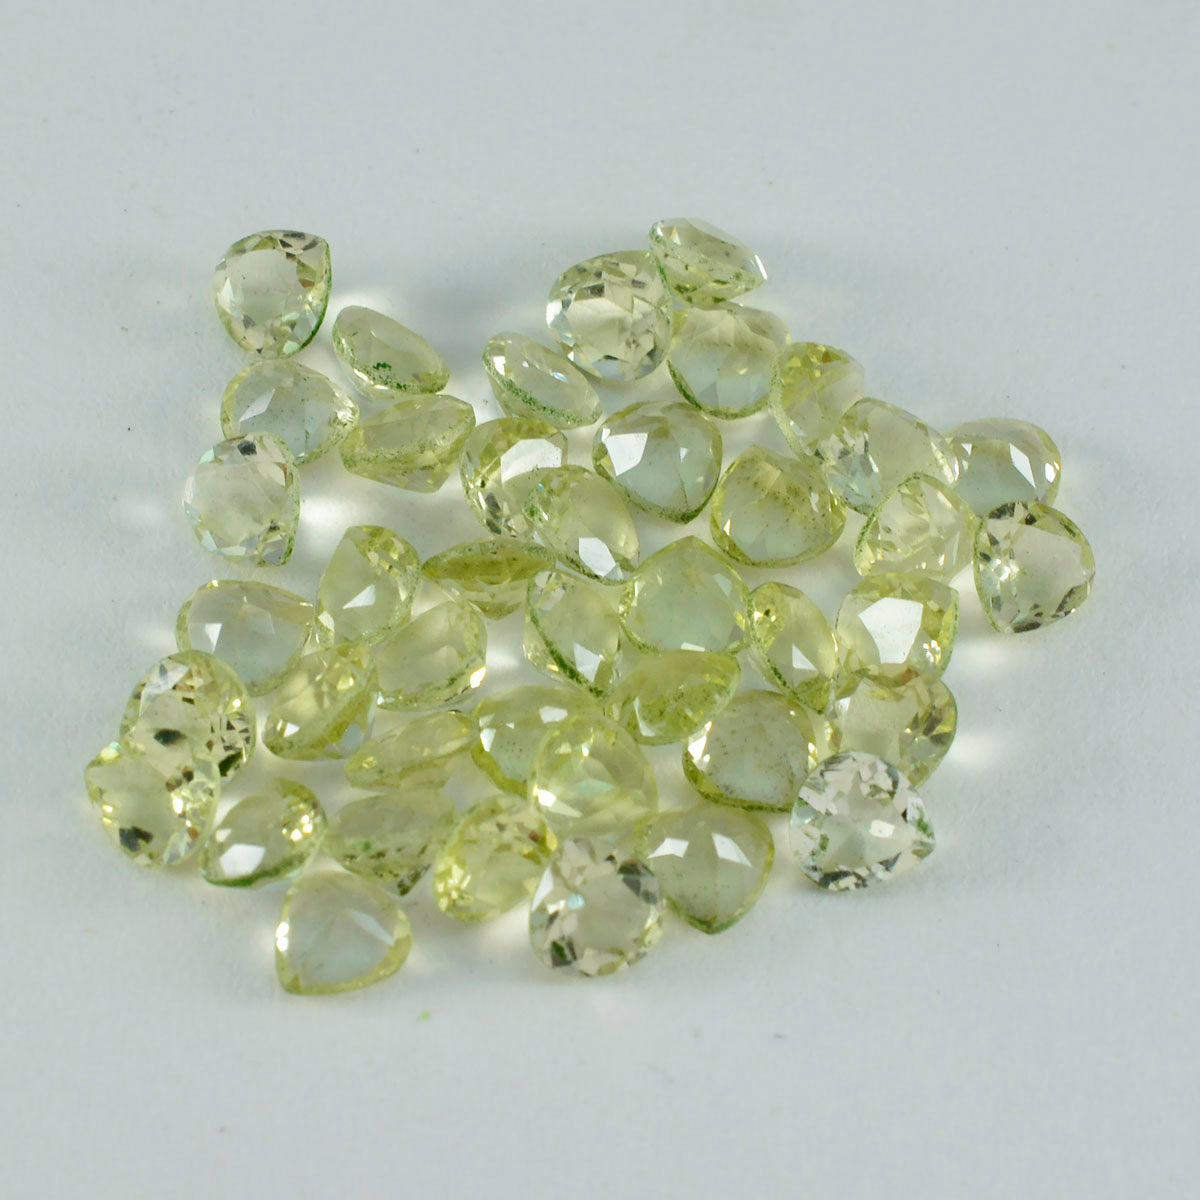 Riyogems 1PC Yellow Lemon Quartz Faceted 5x5 mm Heart Shape nice-looking Quality Loose Gemstone